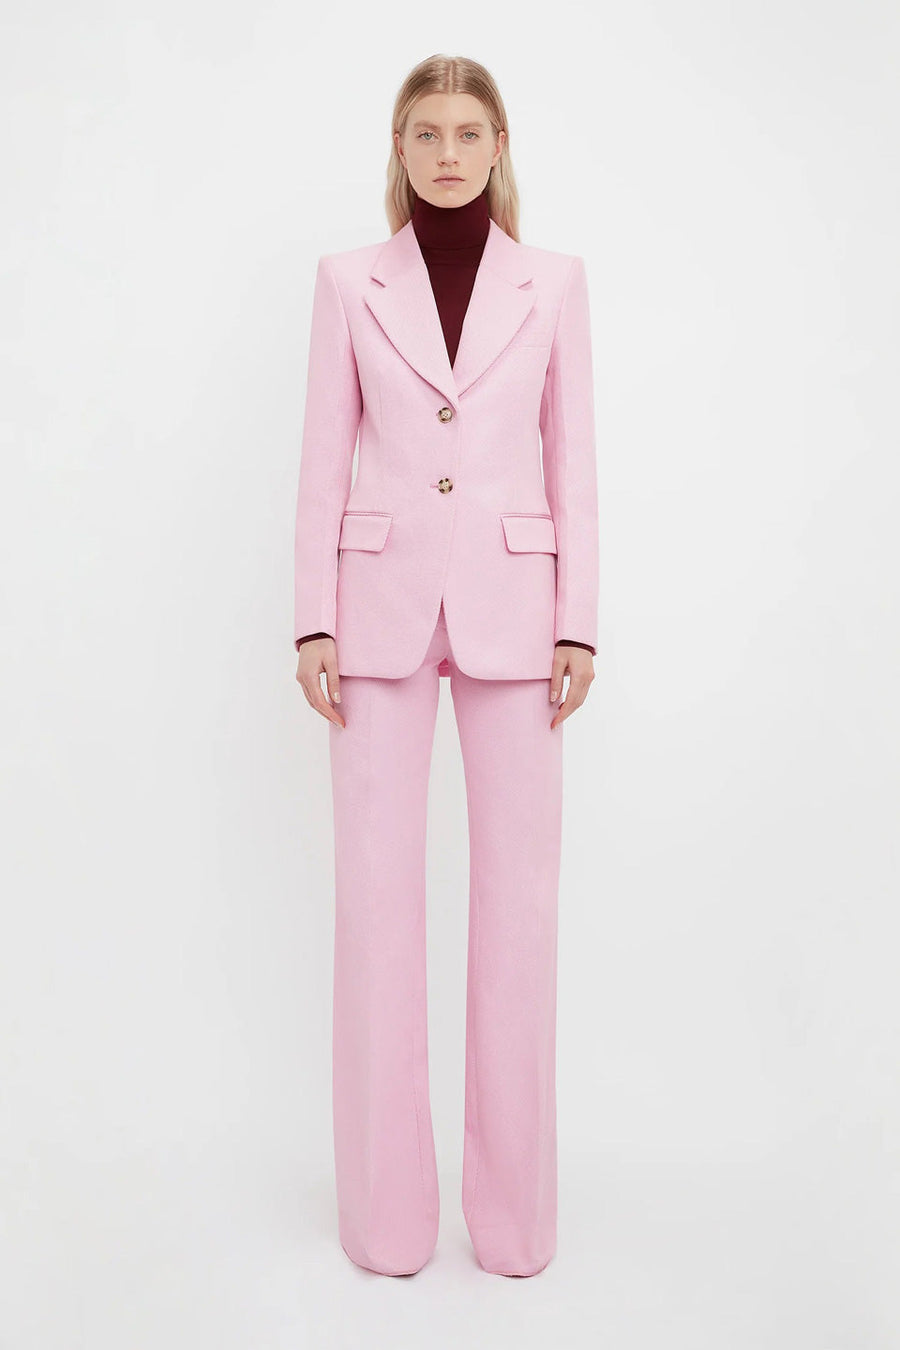 victoria beckham high single button jacket pink figure front